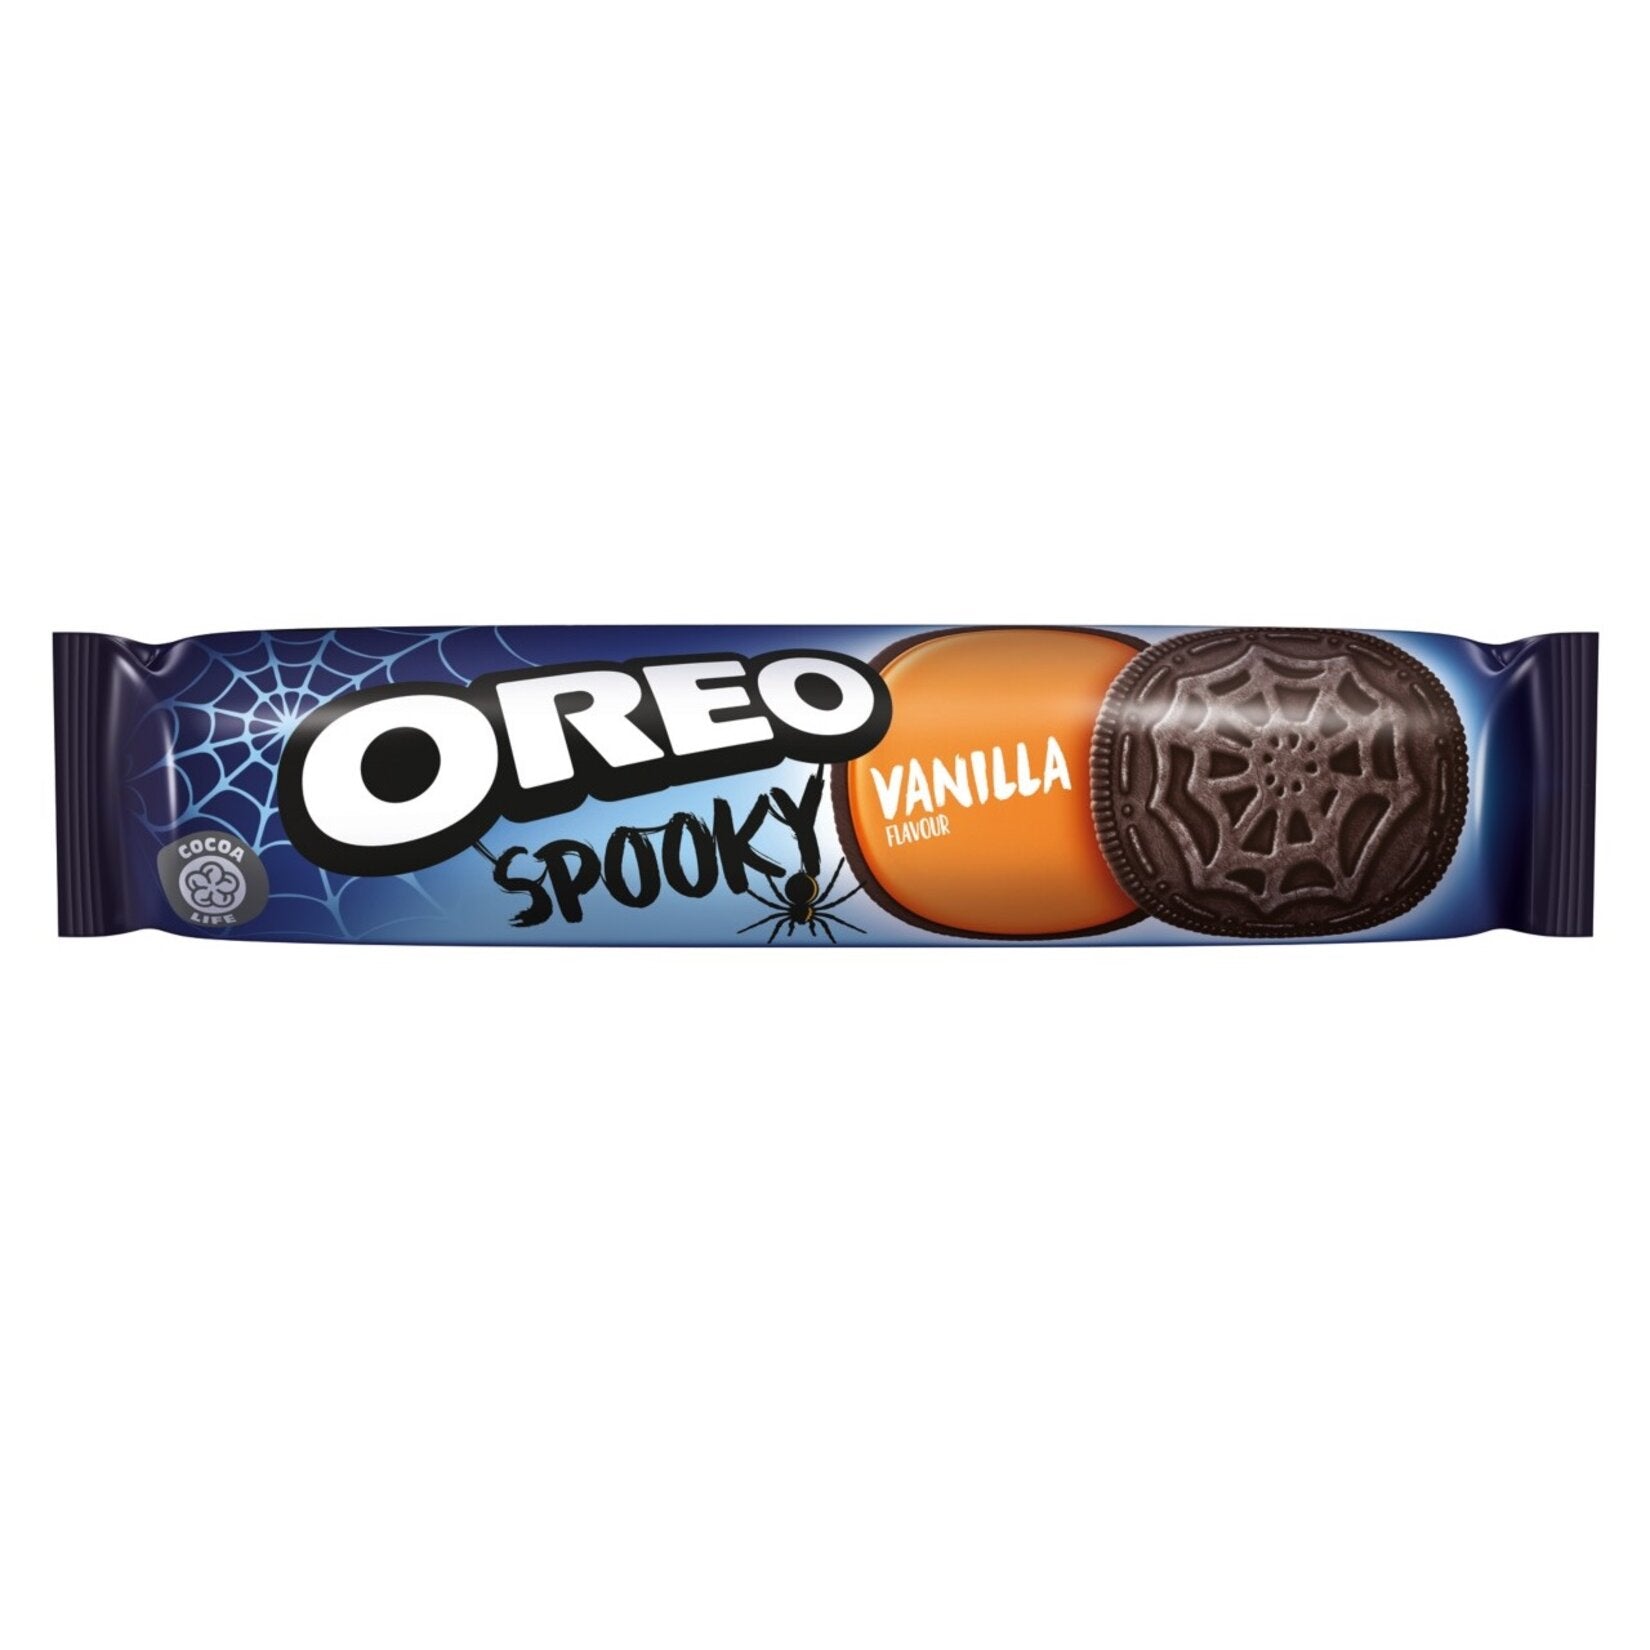 Oreo Spooky Vanilla Flavour - Big Pack 154g